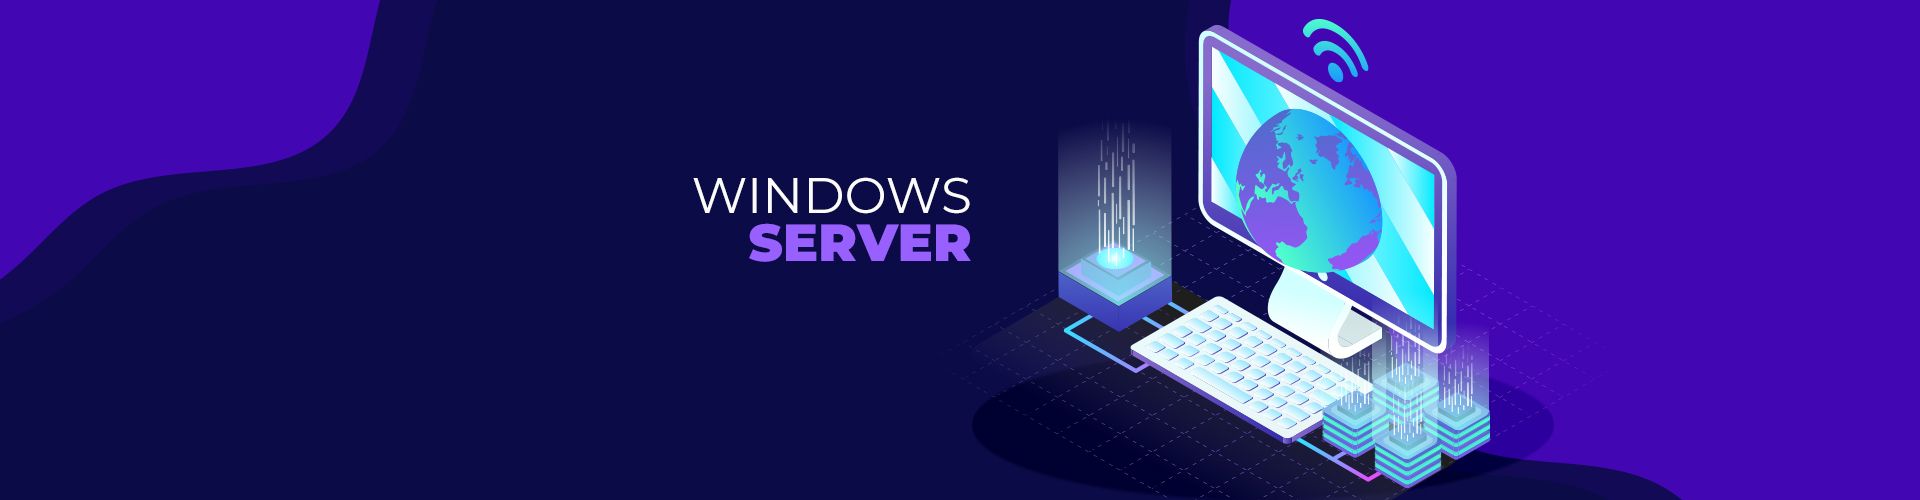 Curso de Windows Server - Escola Cursos Maringá